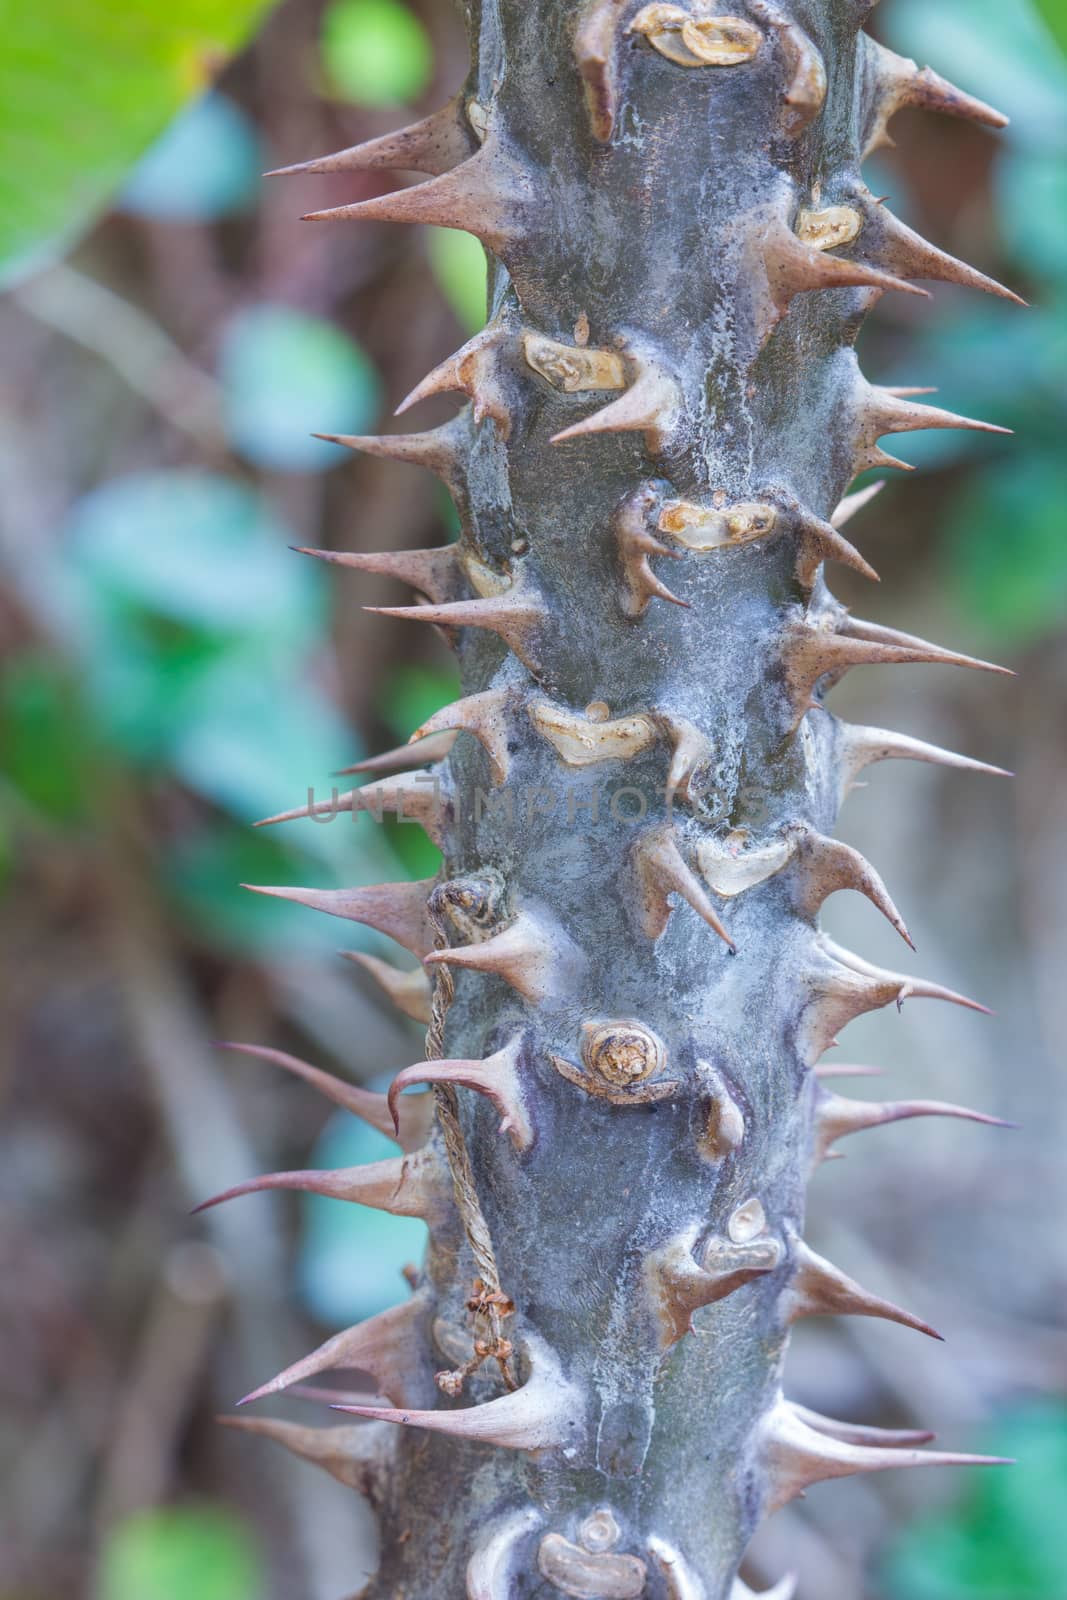 Closeup view of the stem of 'Euphorbia Milii'